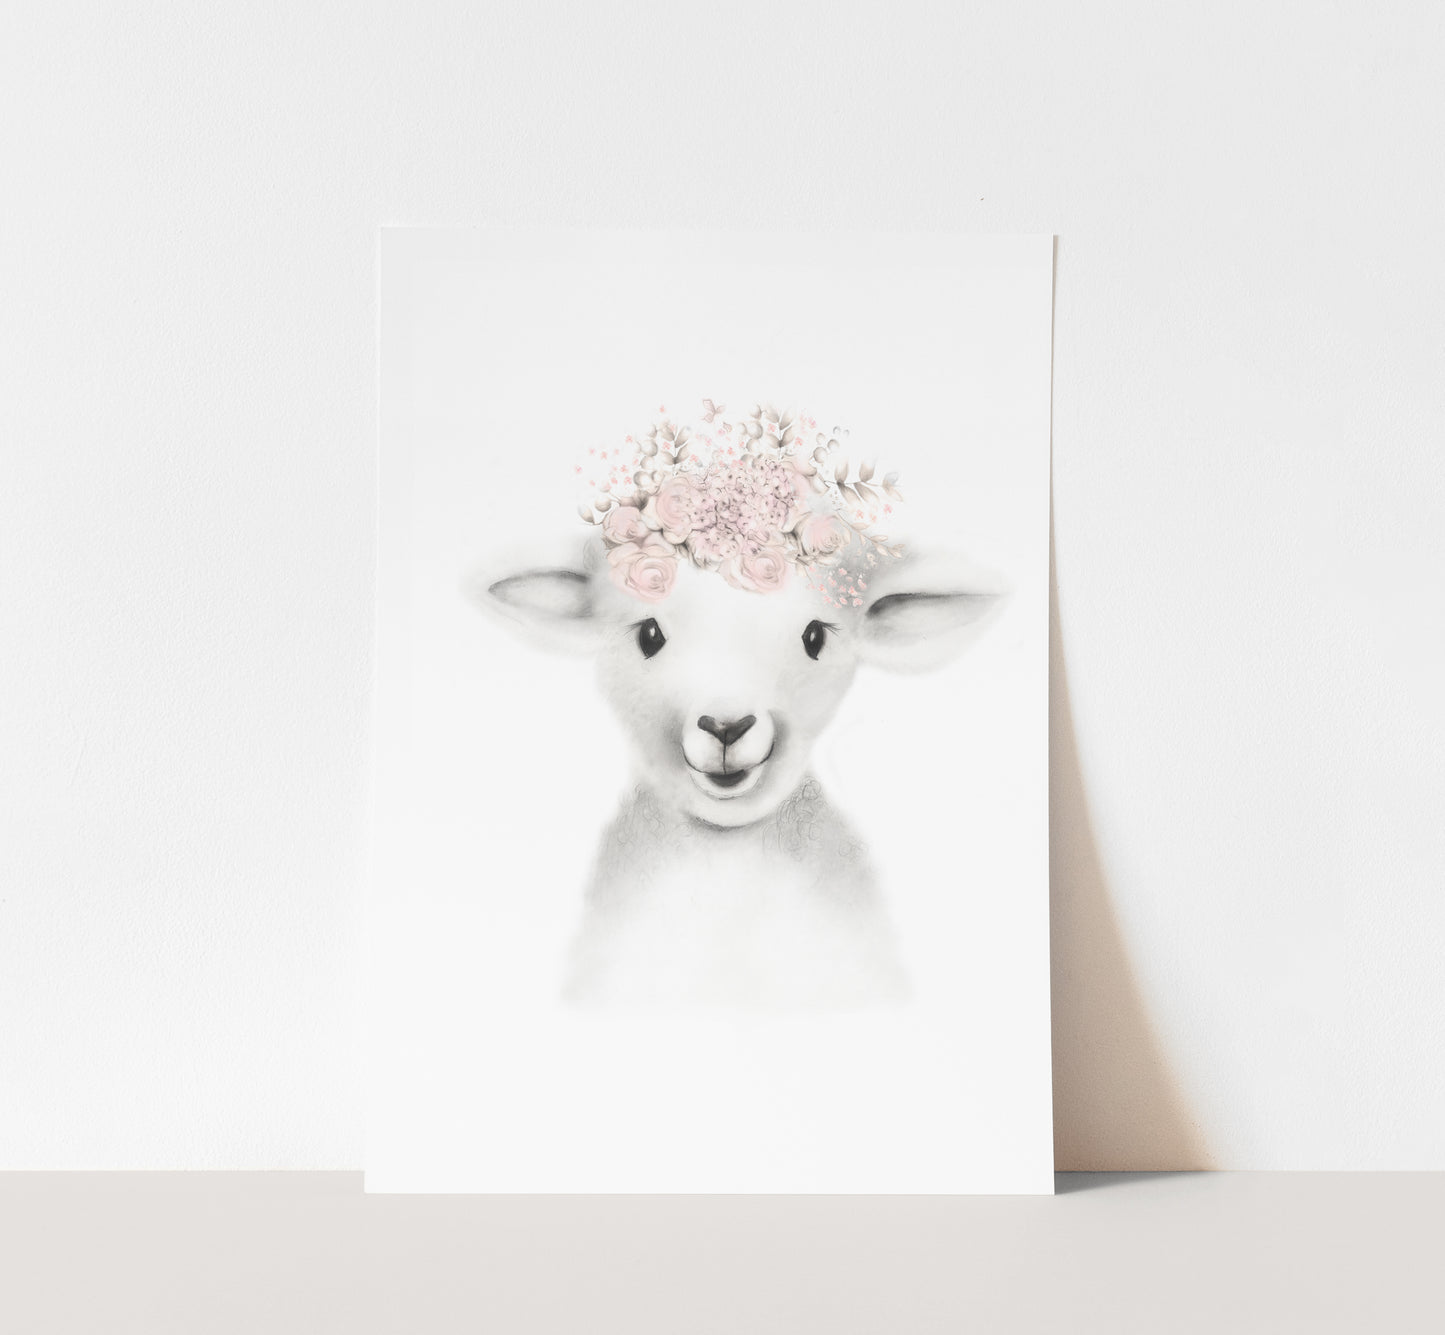 Lamb with Blush Flower Crown Print - Studio Q - Art by Nicky Quartermaine Scott